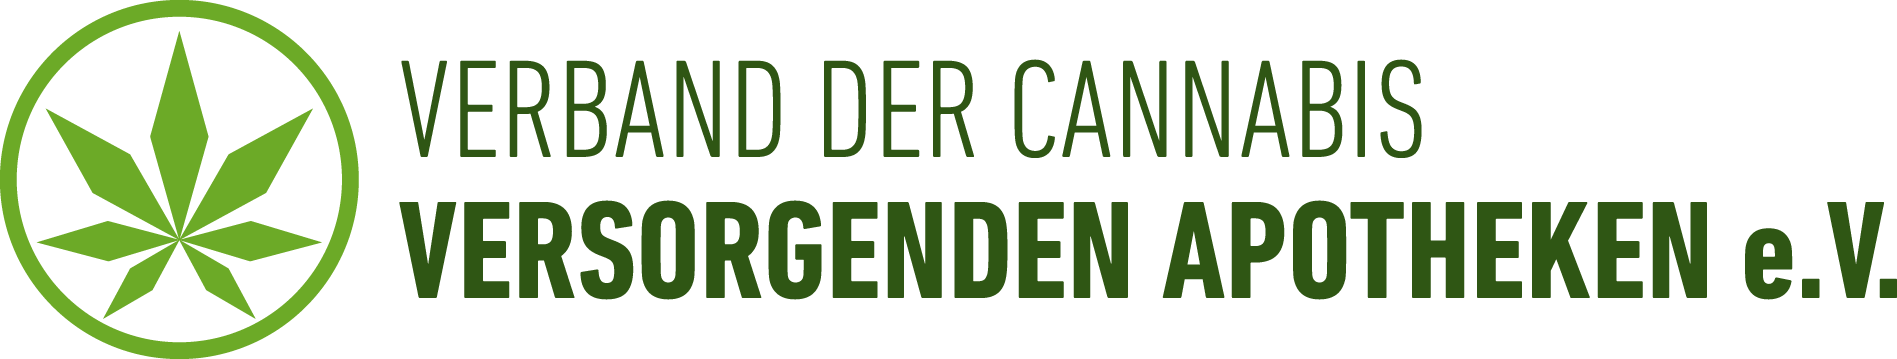 Logo VCA Deutschland apotheke ev